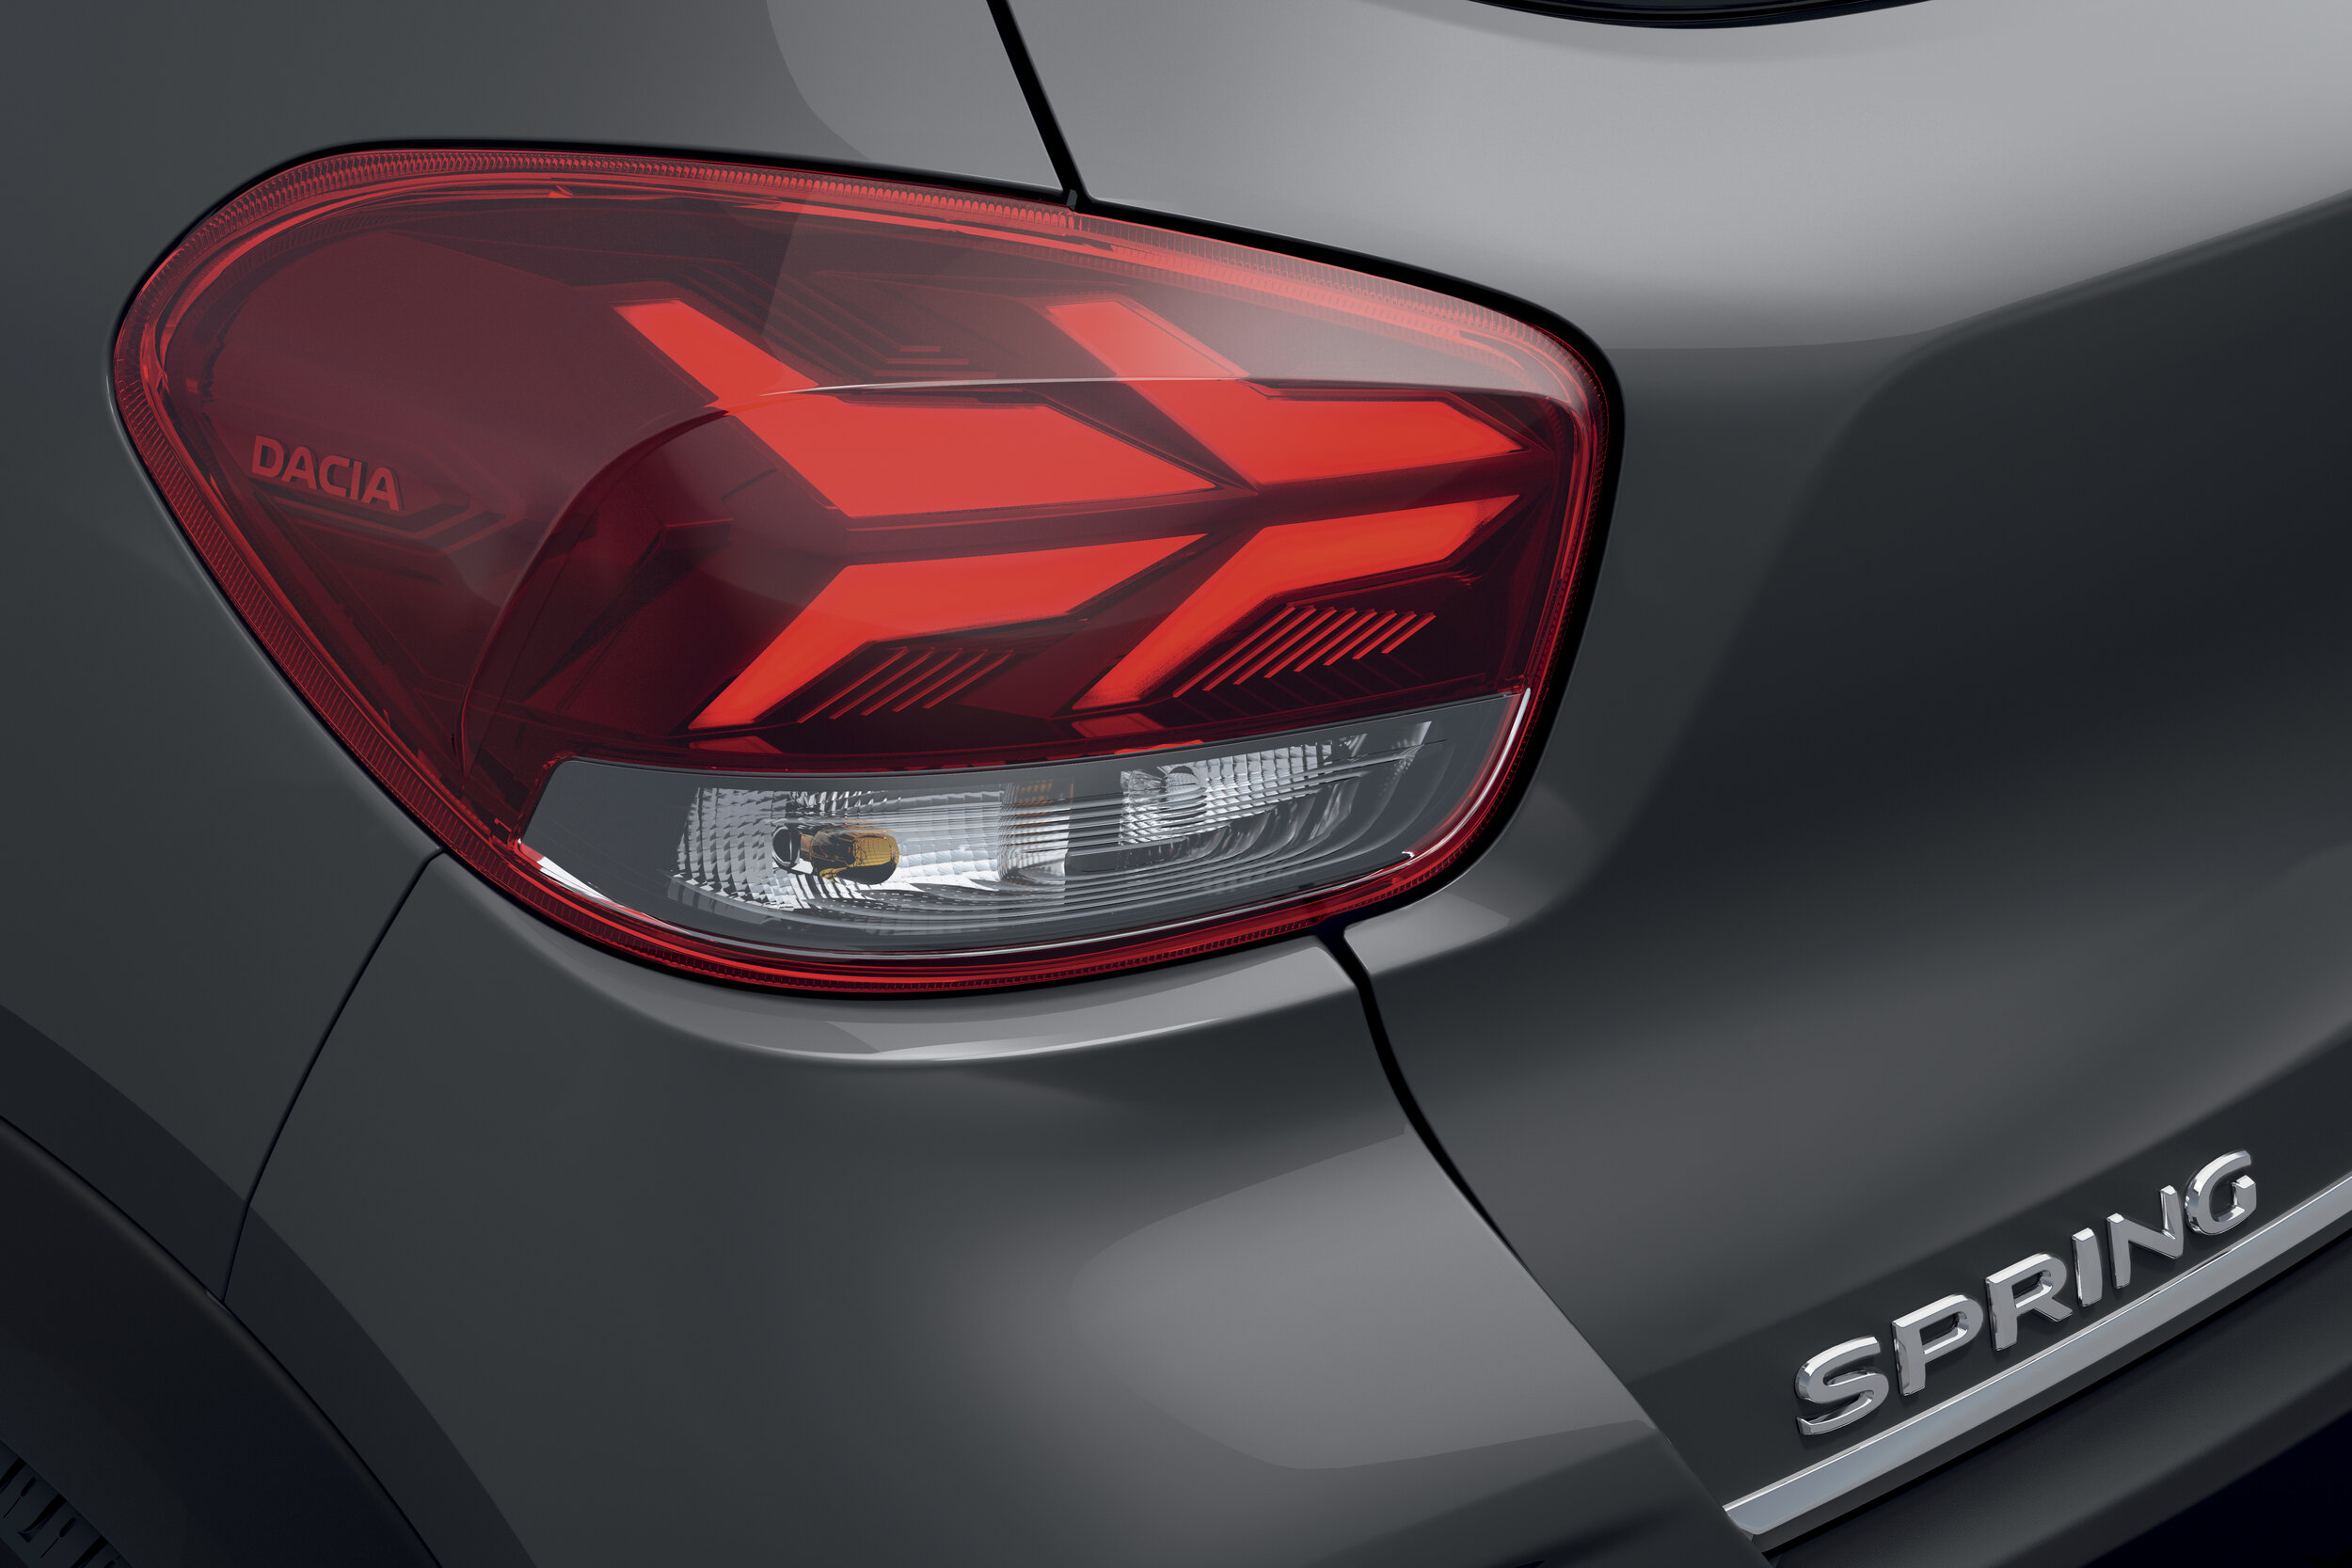 2020 - Dacia SPRING (13).jpg